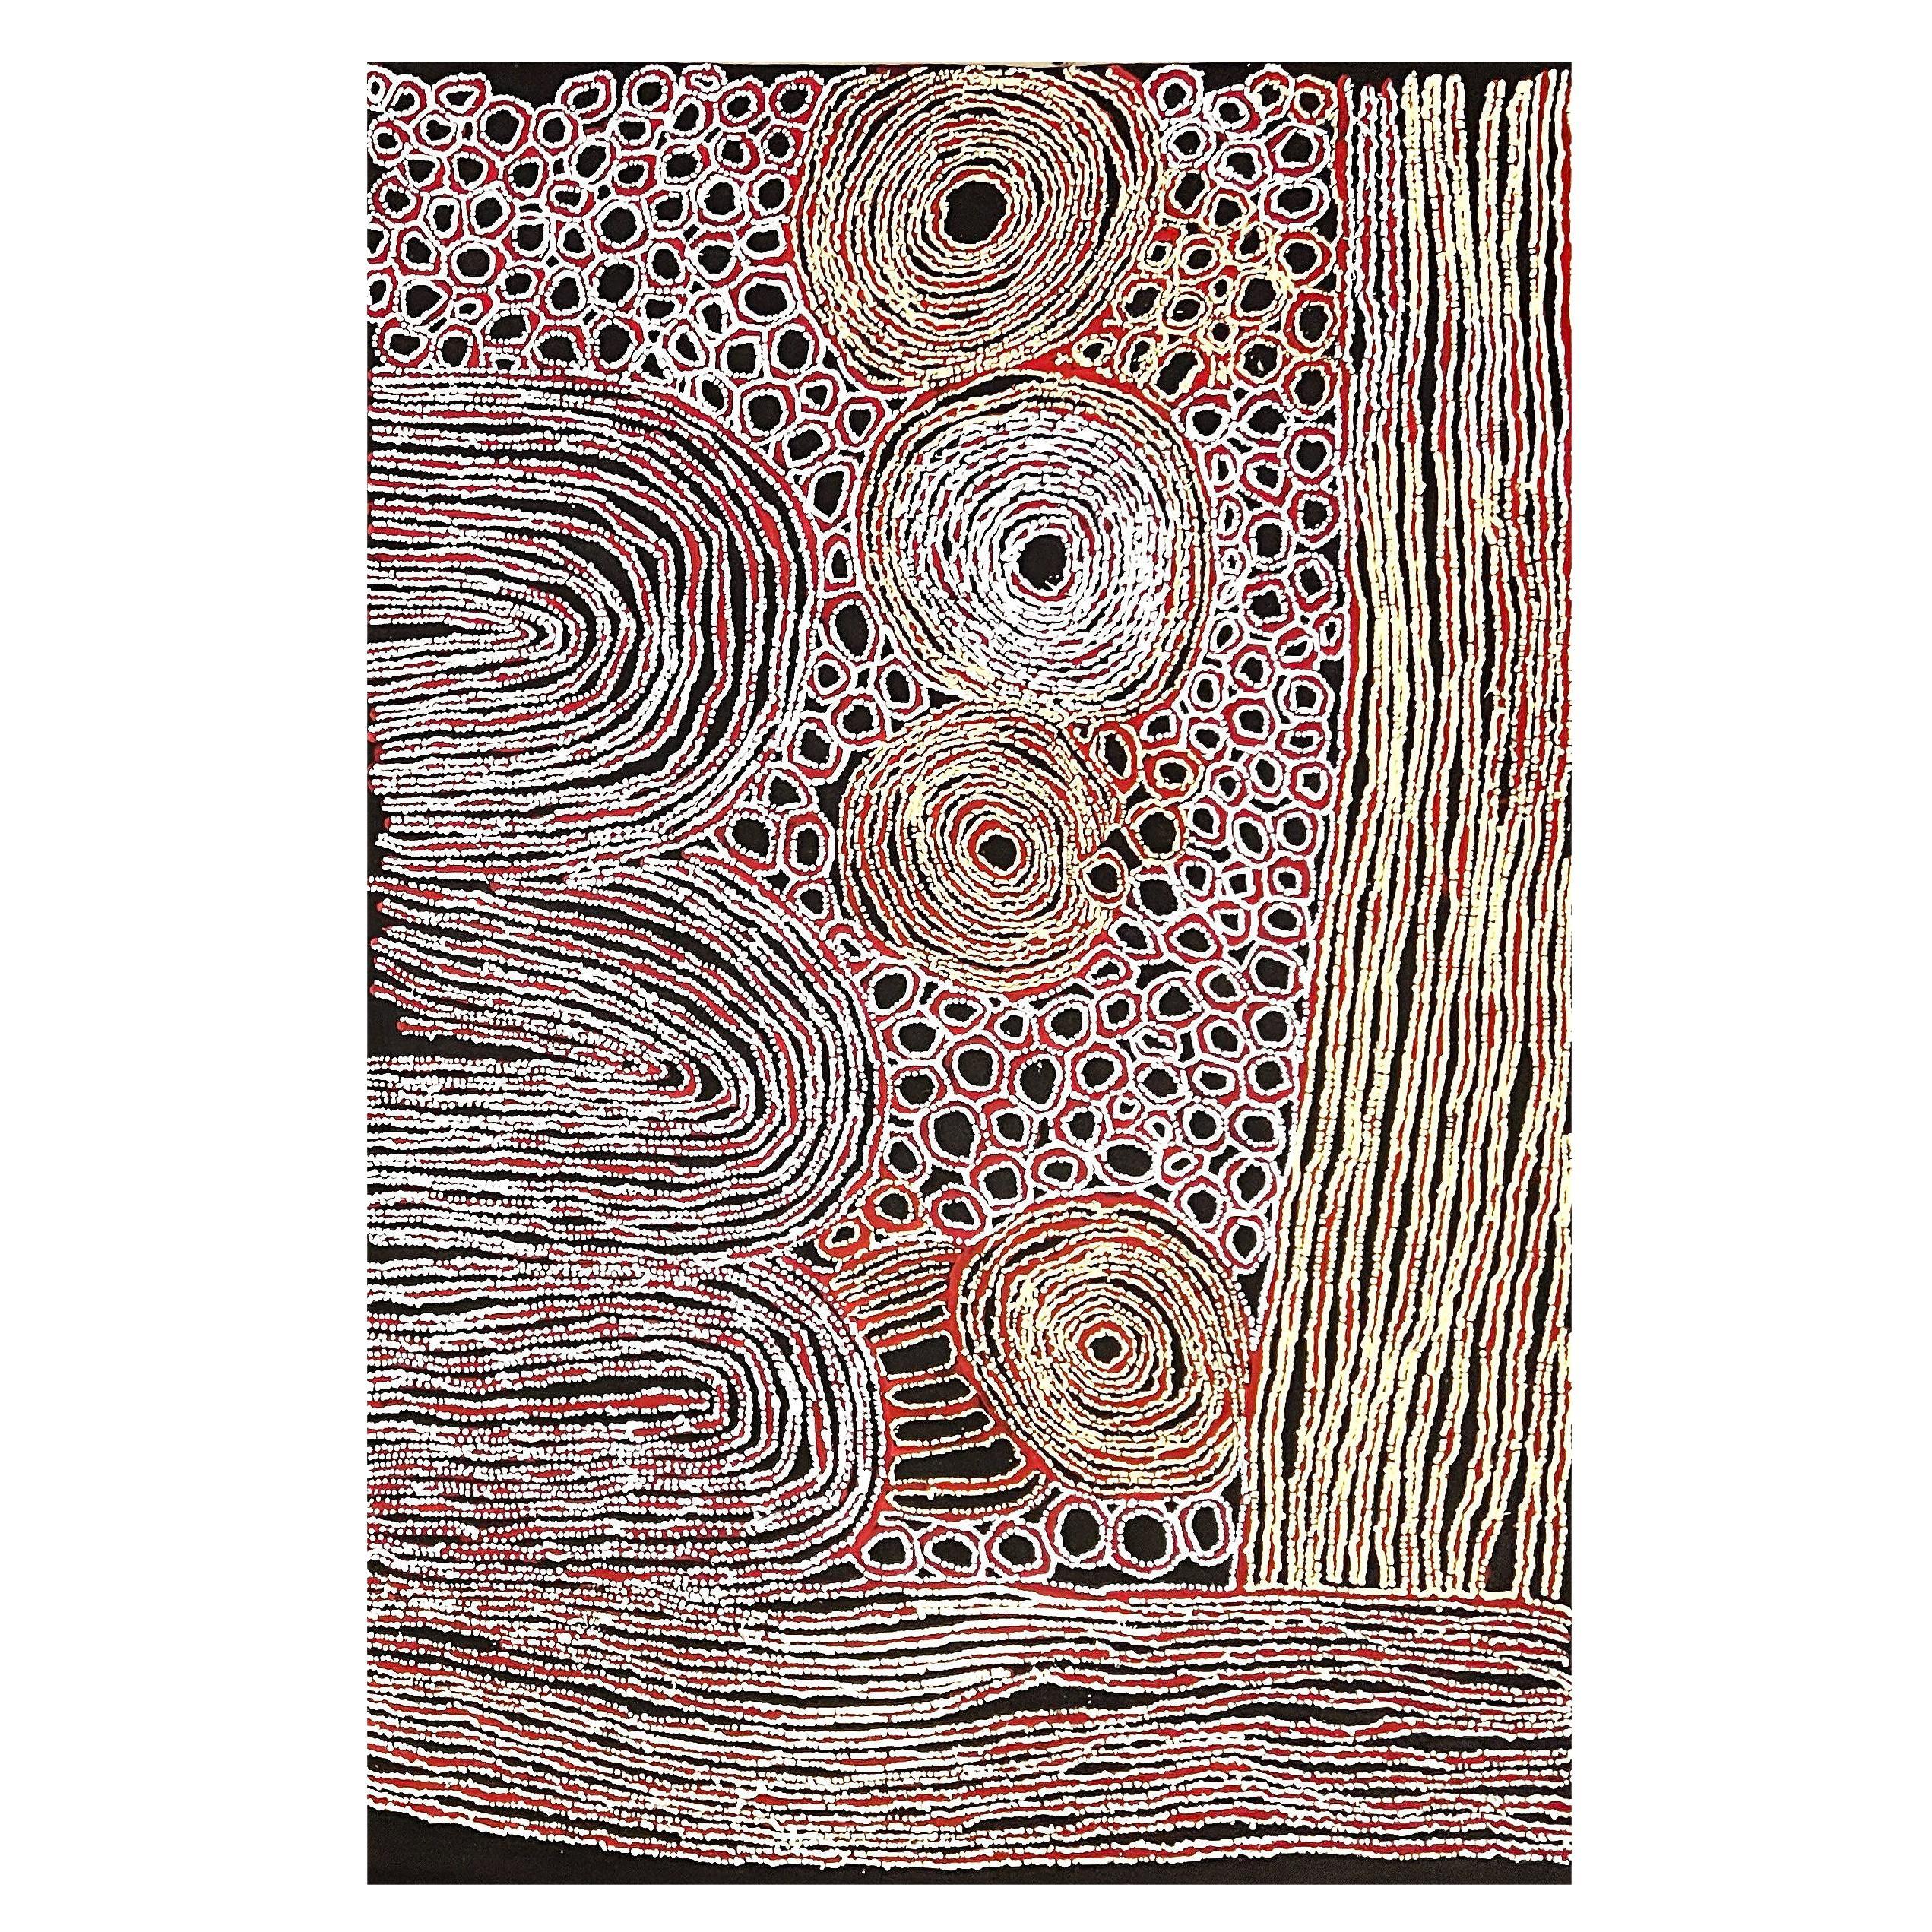 Peinture aborigène australienne contemporaine de Dibkura Napanangka